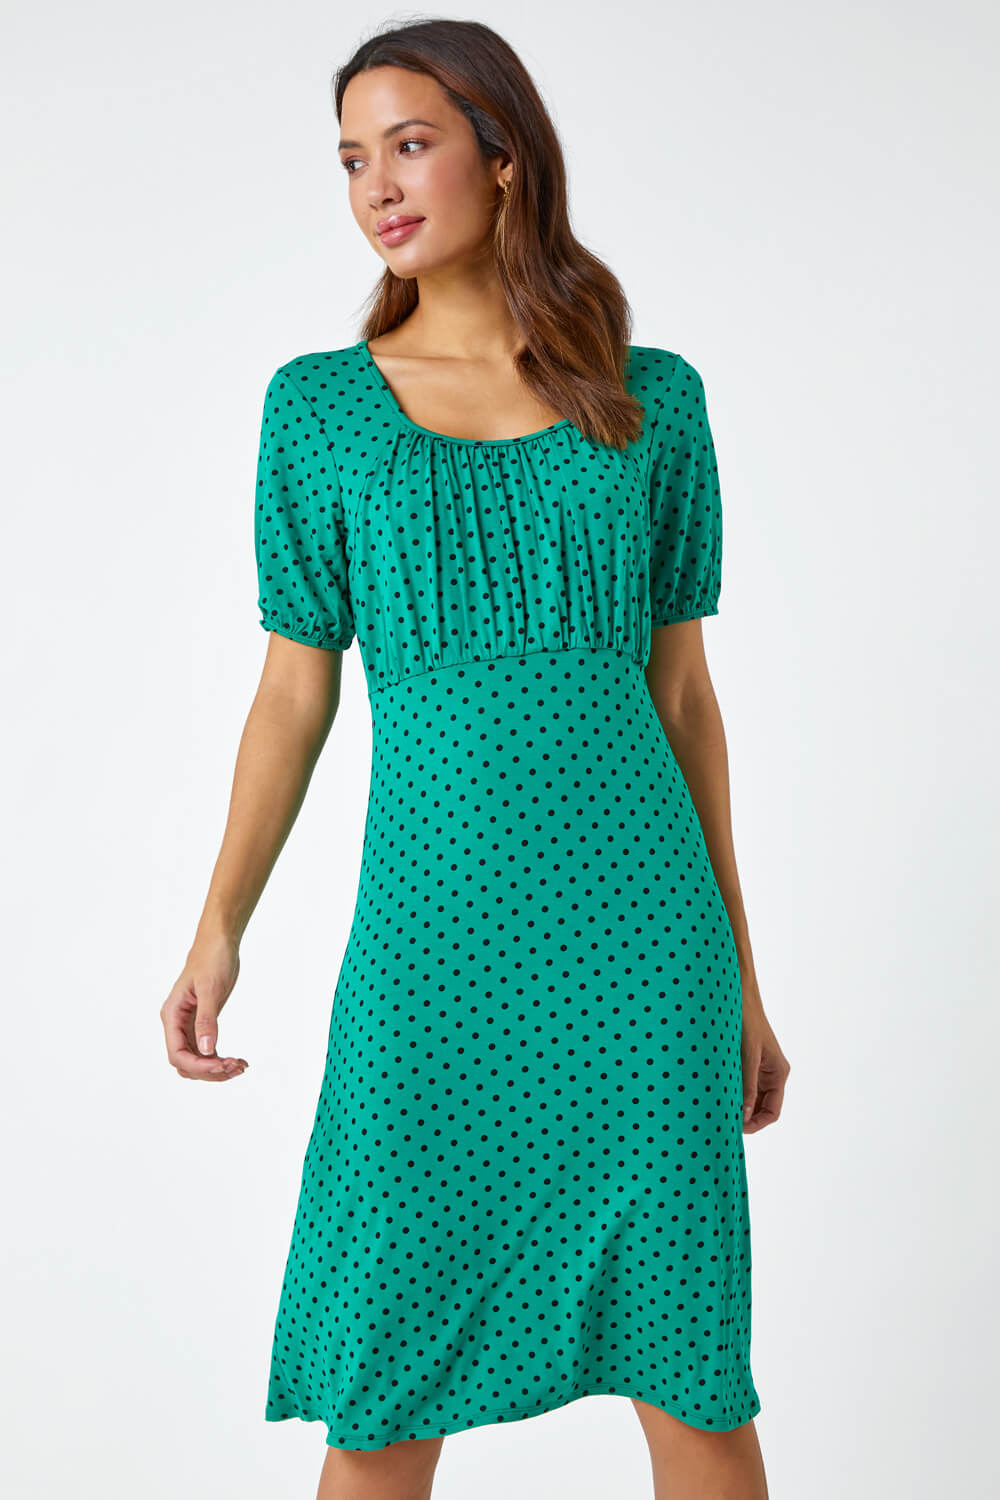 Green Polka Dot Print Stretch Dress, Image 2 of 5